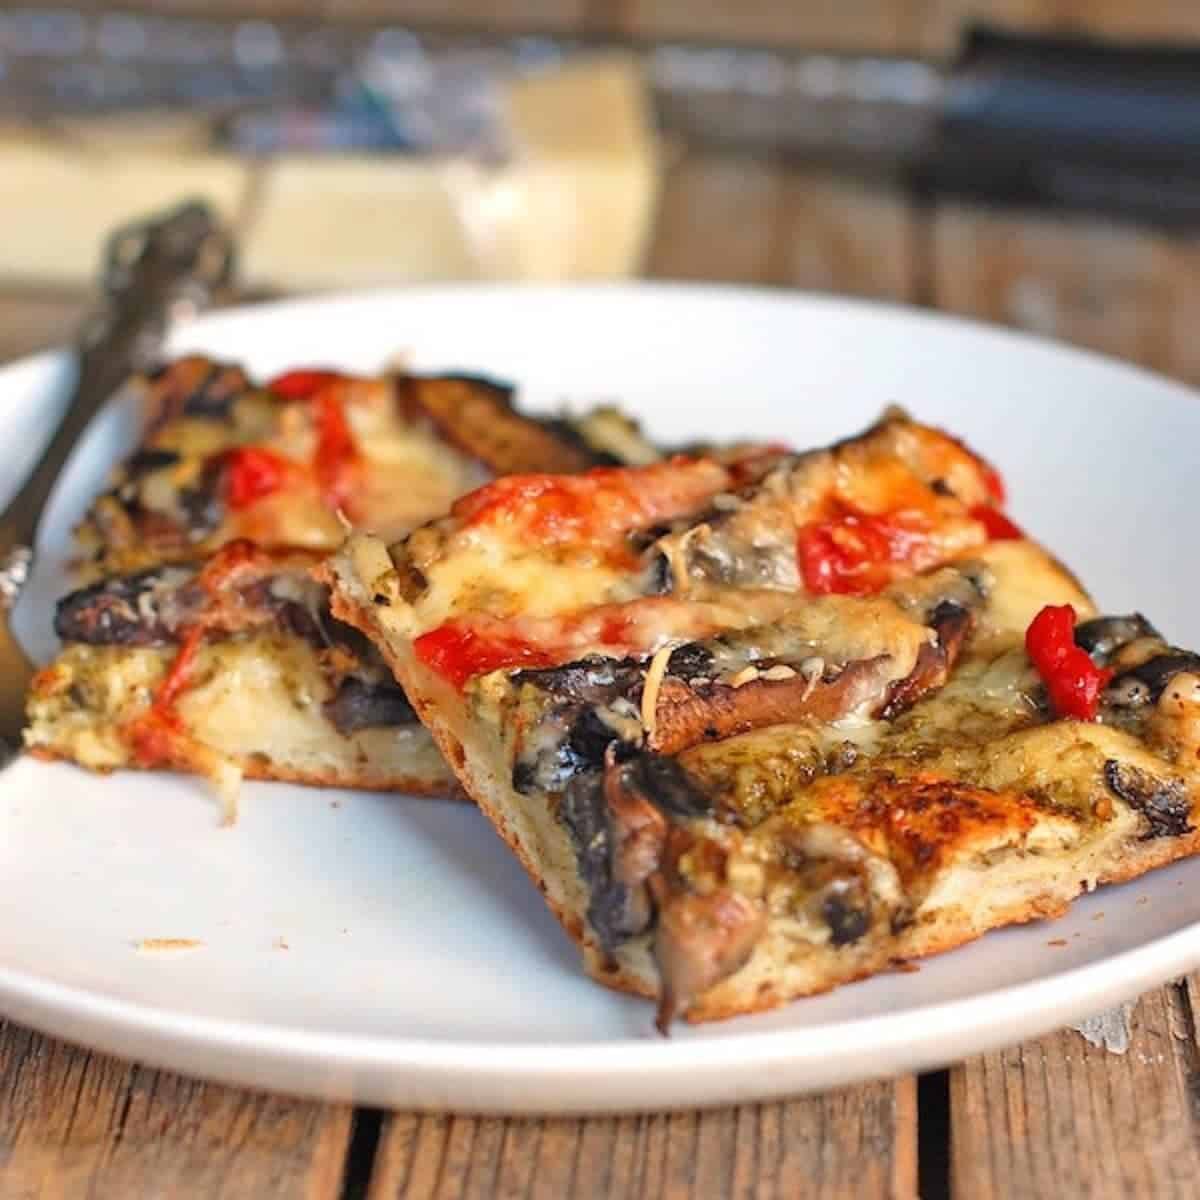 Pesto pizza with portobello mushrooms and red peppers. 